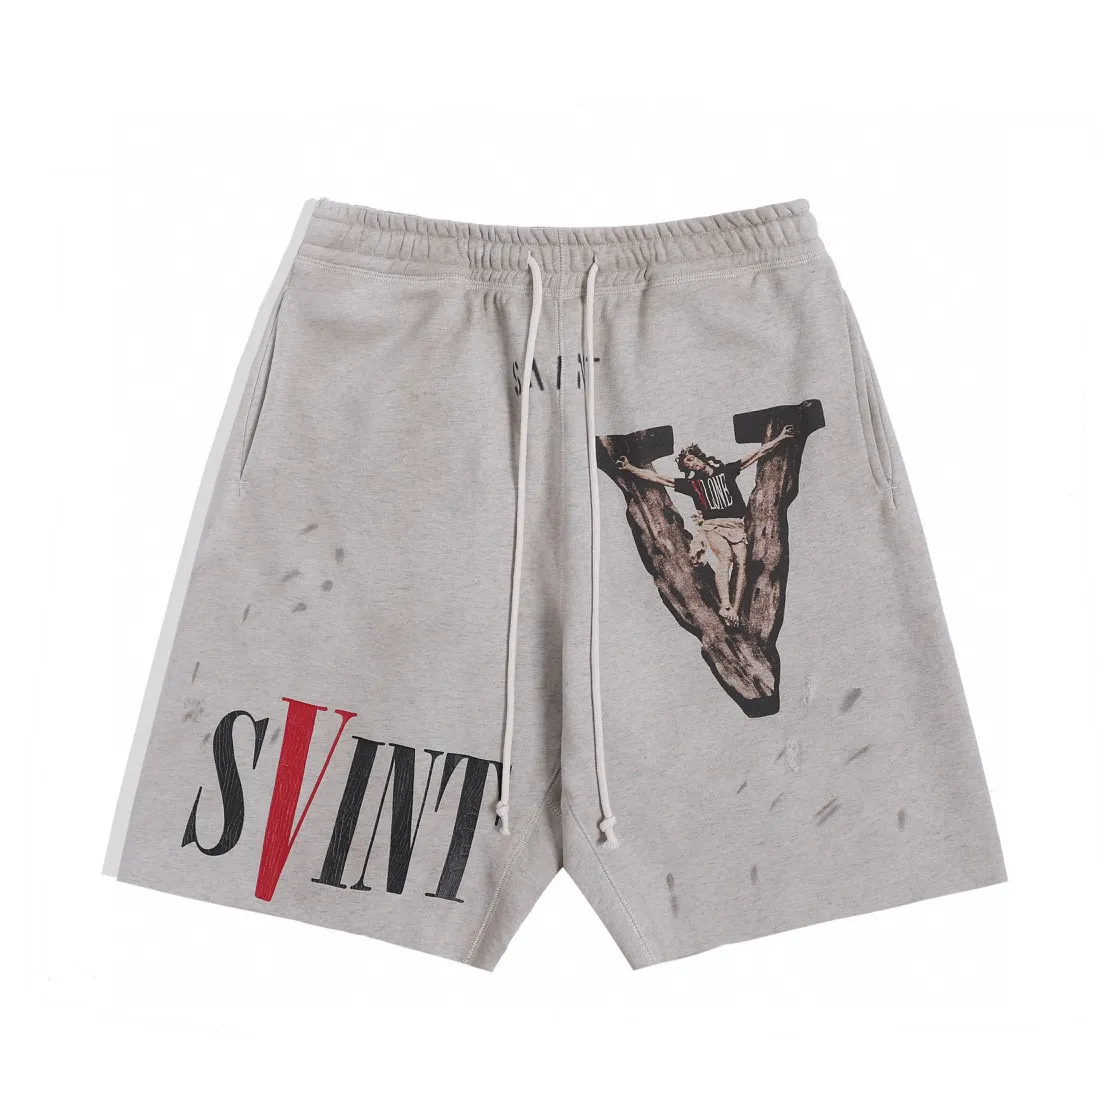 Falection Mens 22ss Fashion Saint Michaels v Shorts print reced spressed sweatpants basket